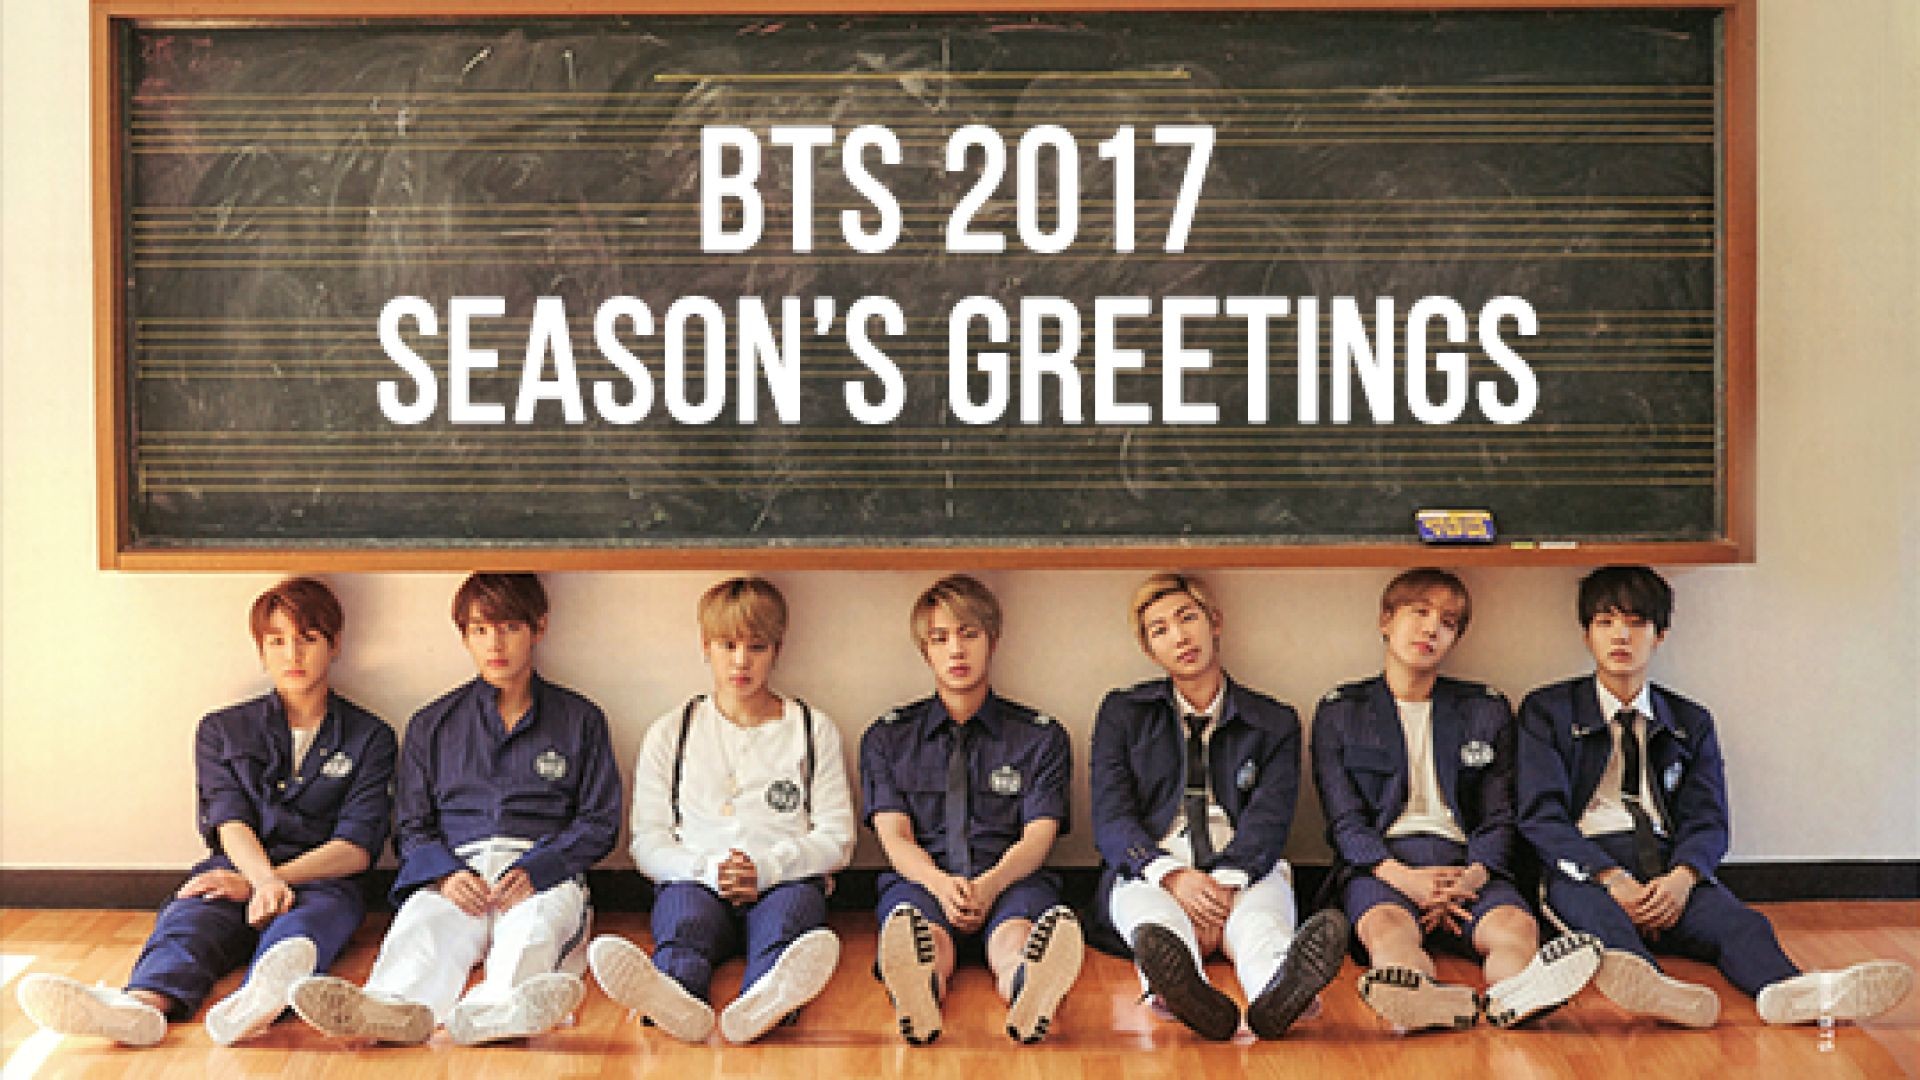 BTS 2017 SEASON'S GREETINGS